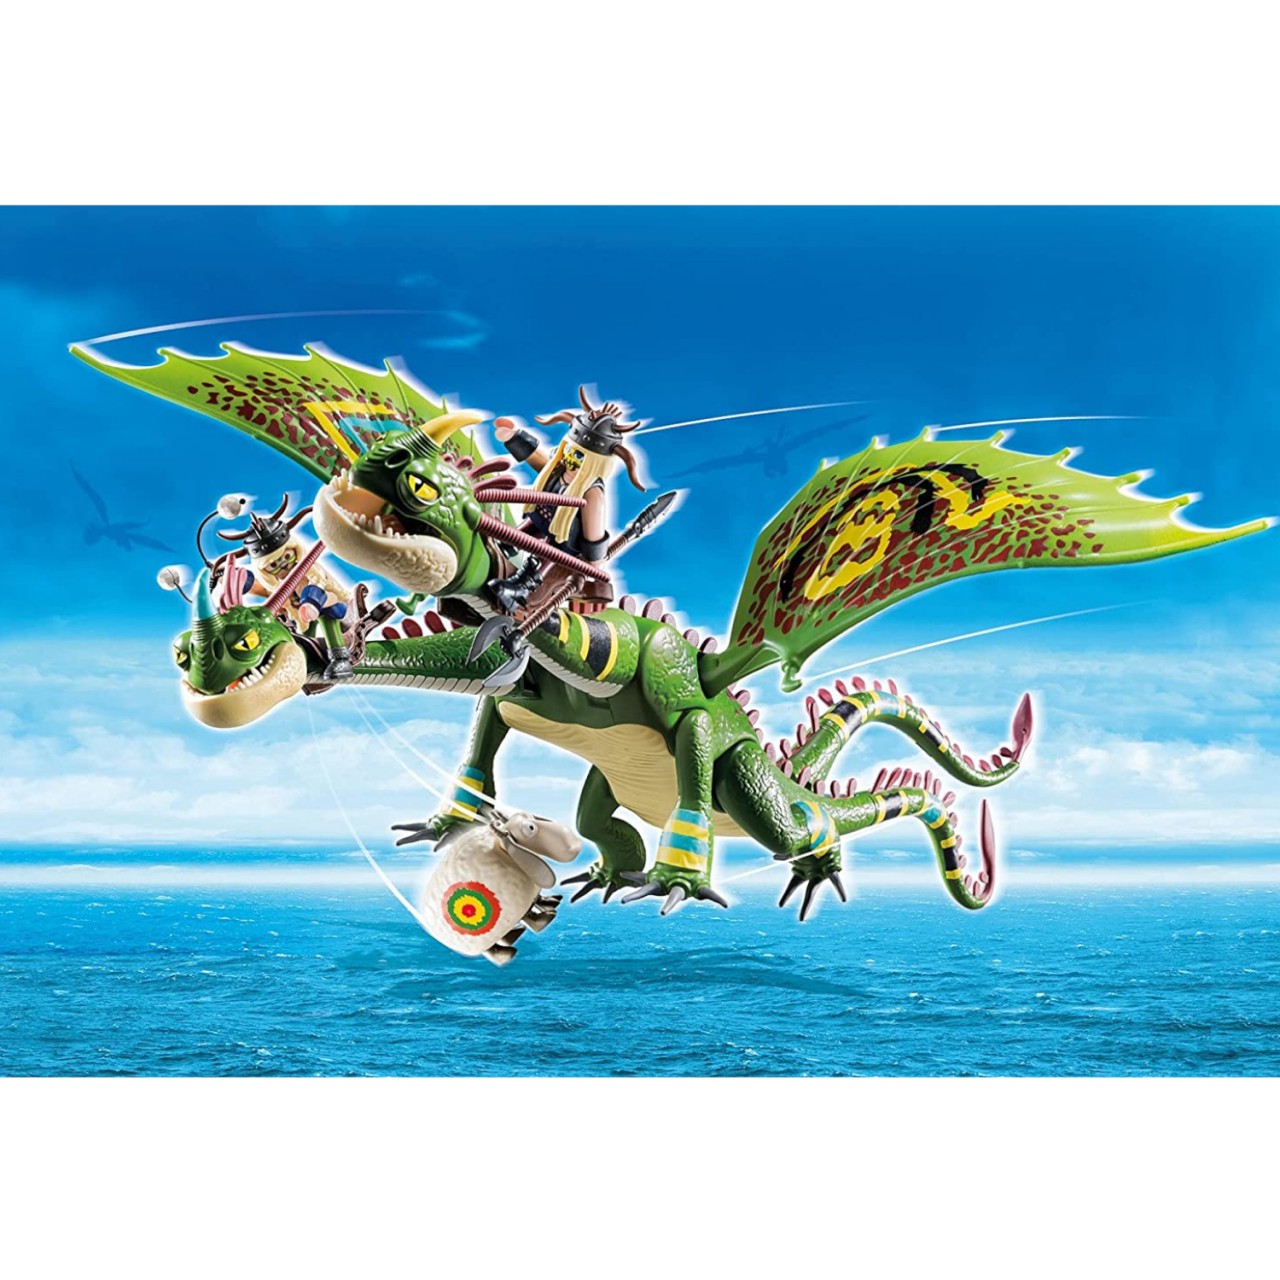 Playmobil 70730 DreamWorks Dragons: Raffnuss und Taffnuss mit Kotz und Würg